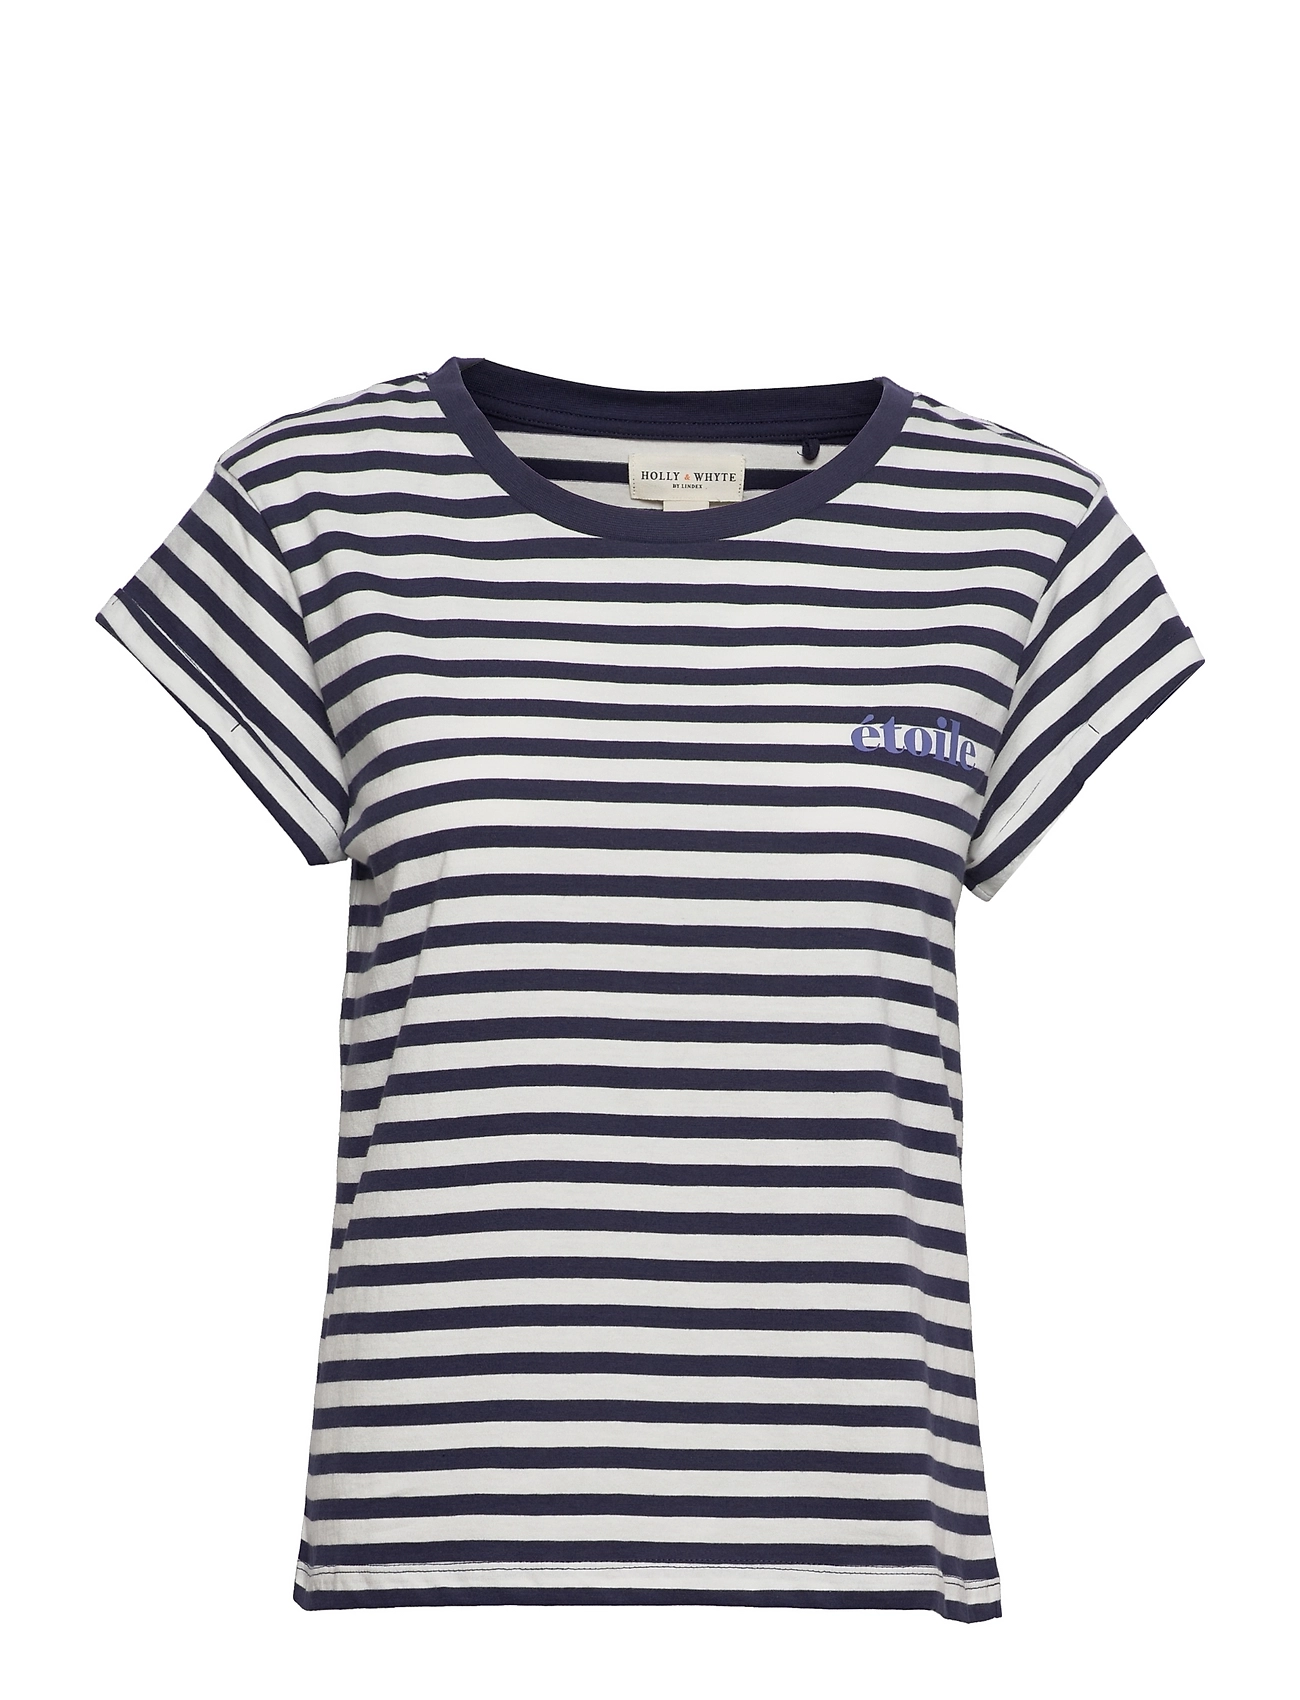 Top Nell T Shirt T-shirts & Tops Short-sleeved Multi/mönstrad Lindex